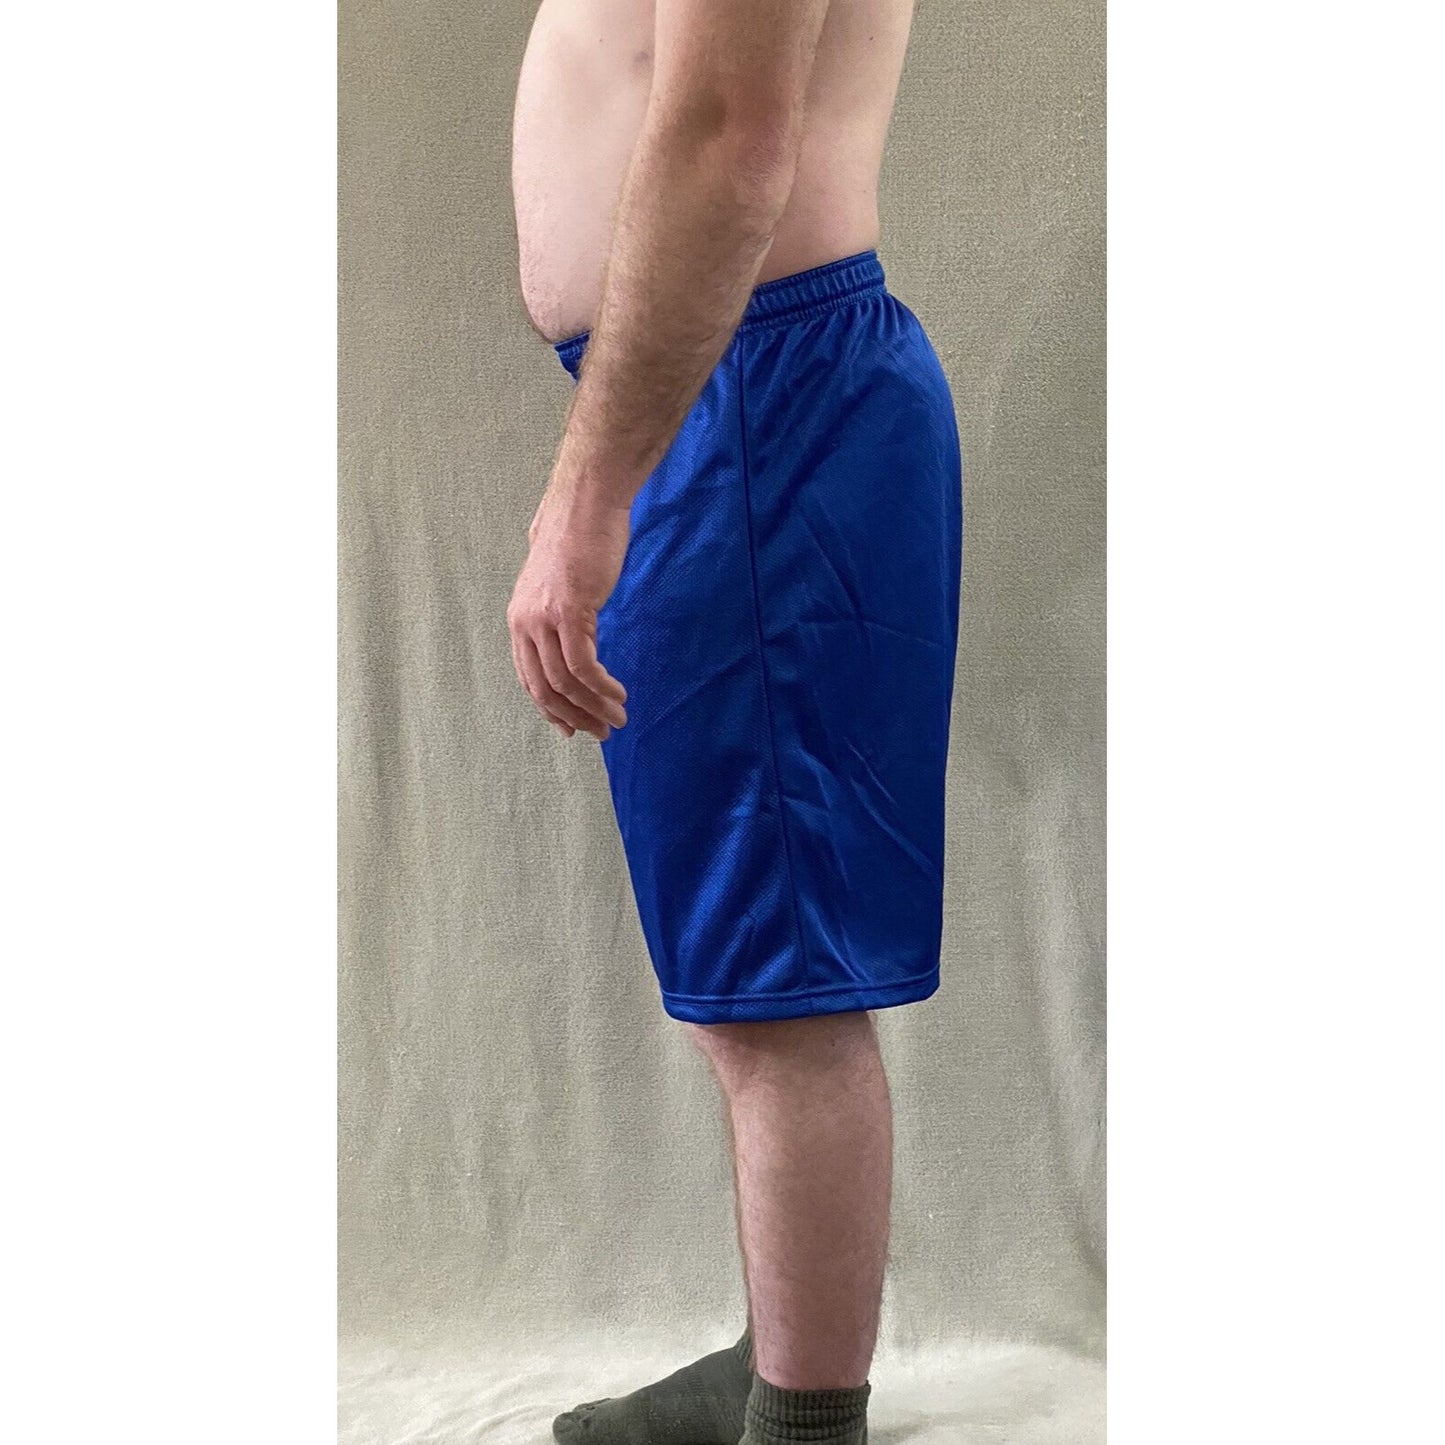 Soffe Men’s Large Royal Blue Basketball Training Polyester Mesh Shorts